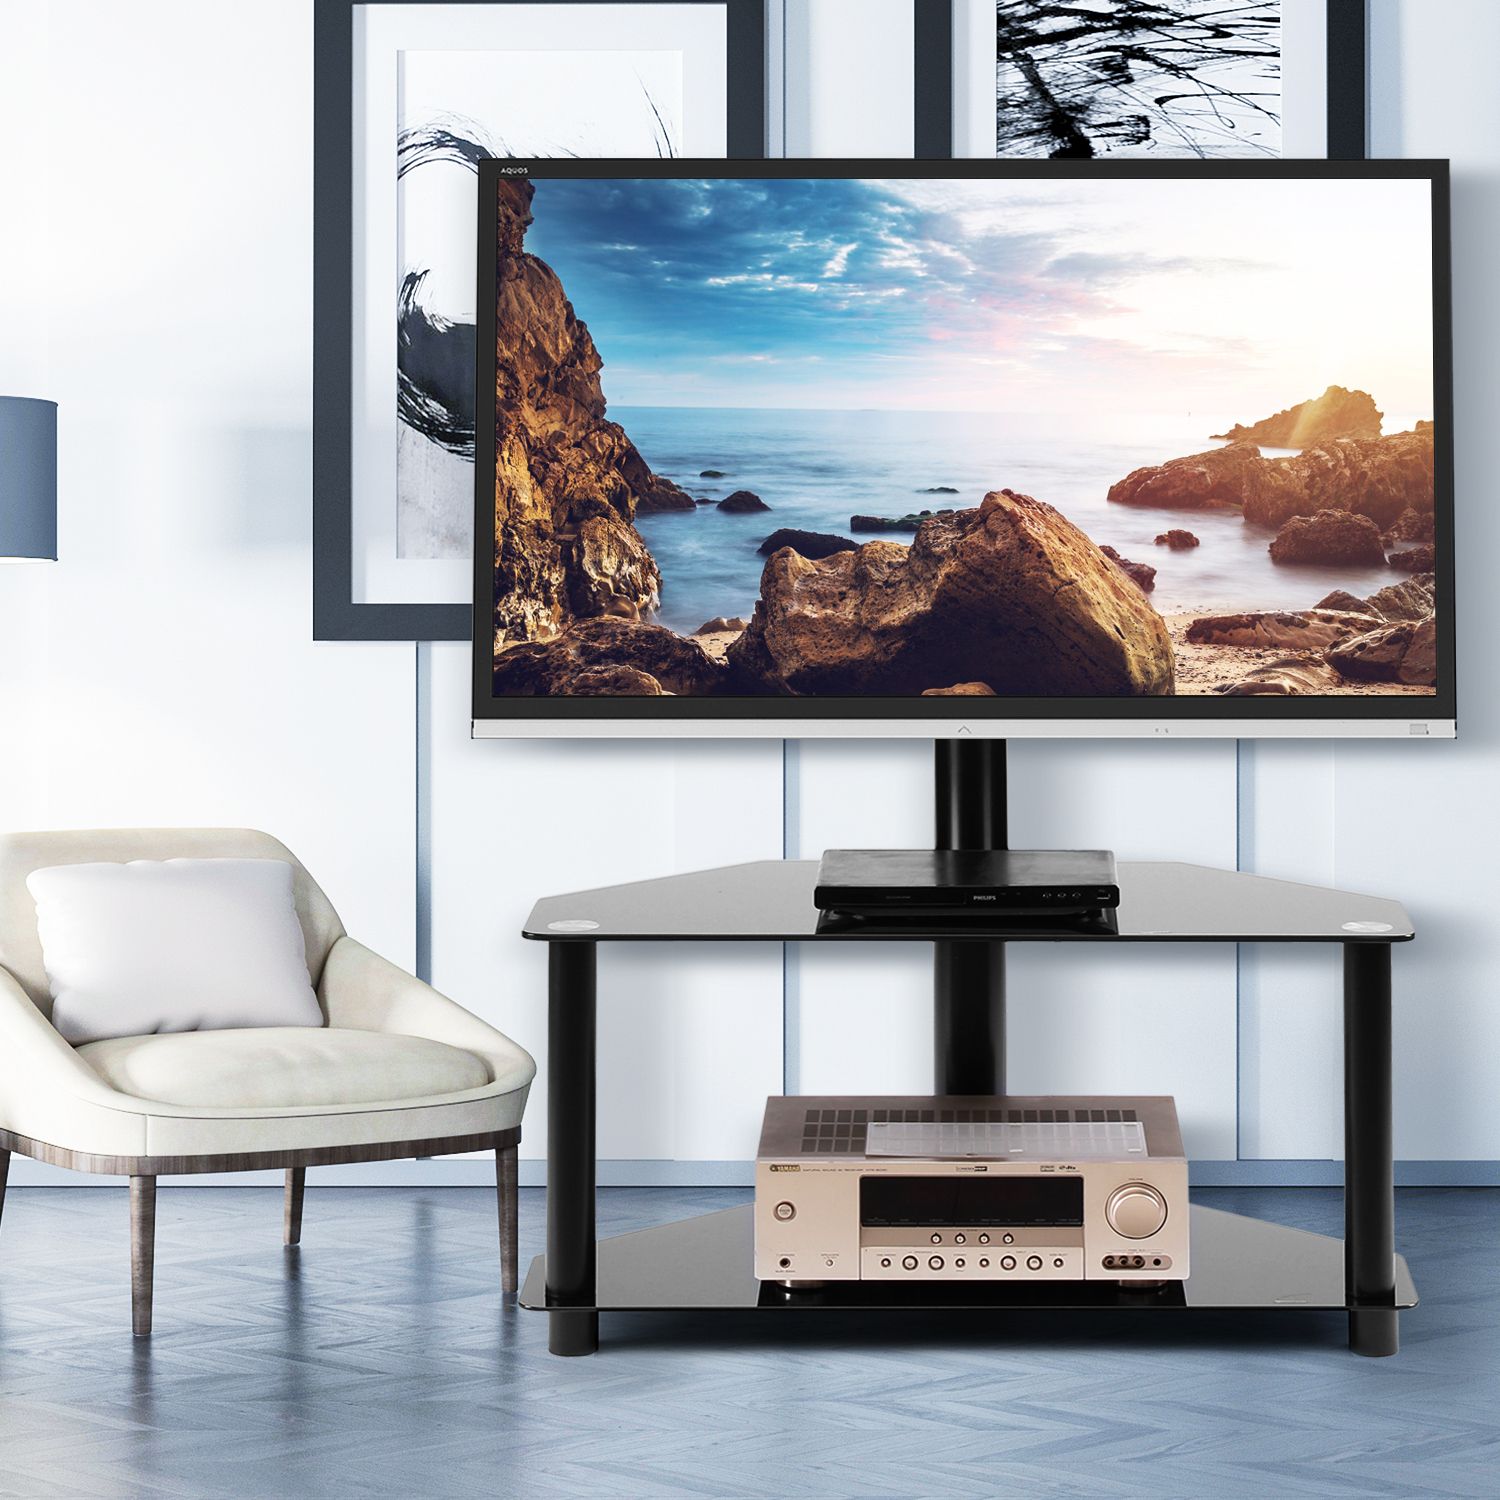 5rcom 2 Shelf Corner Floor Tv Stand With Swivel Mount For With Regard To Swivel Floor Tv Stands Height Adjustable (View 13 of 15)